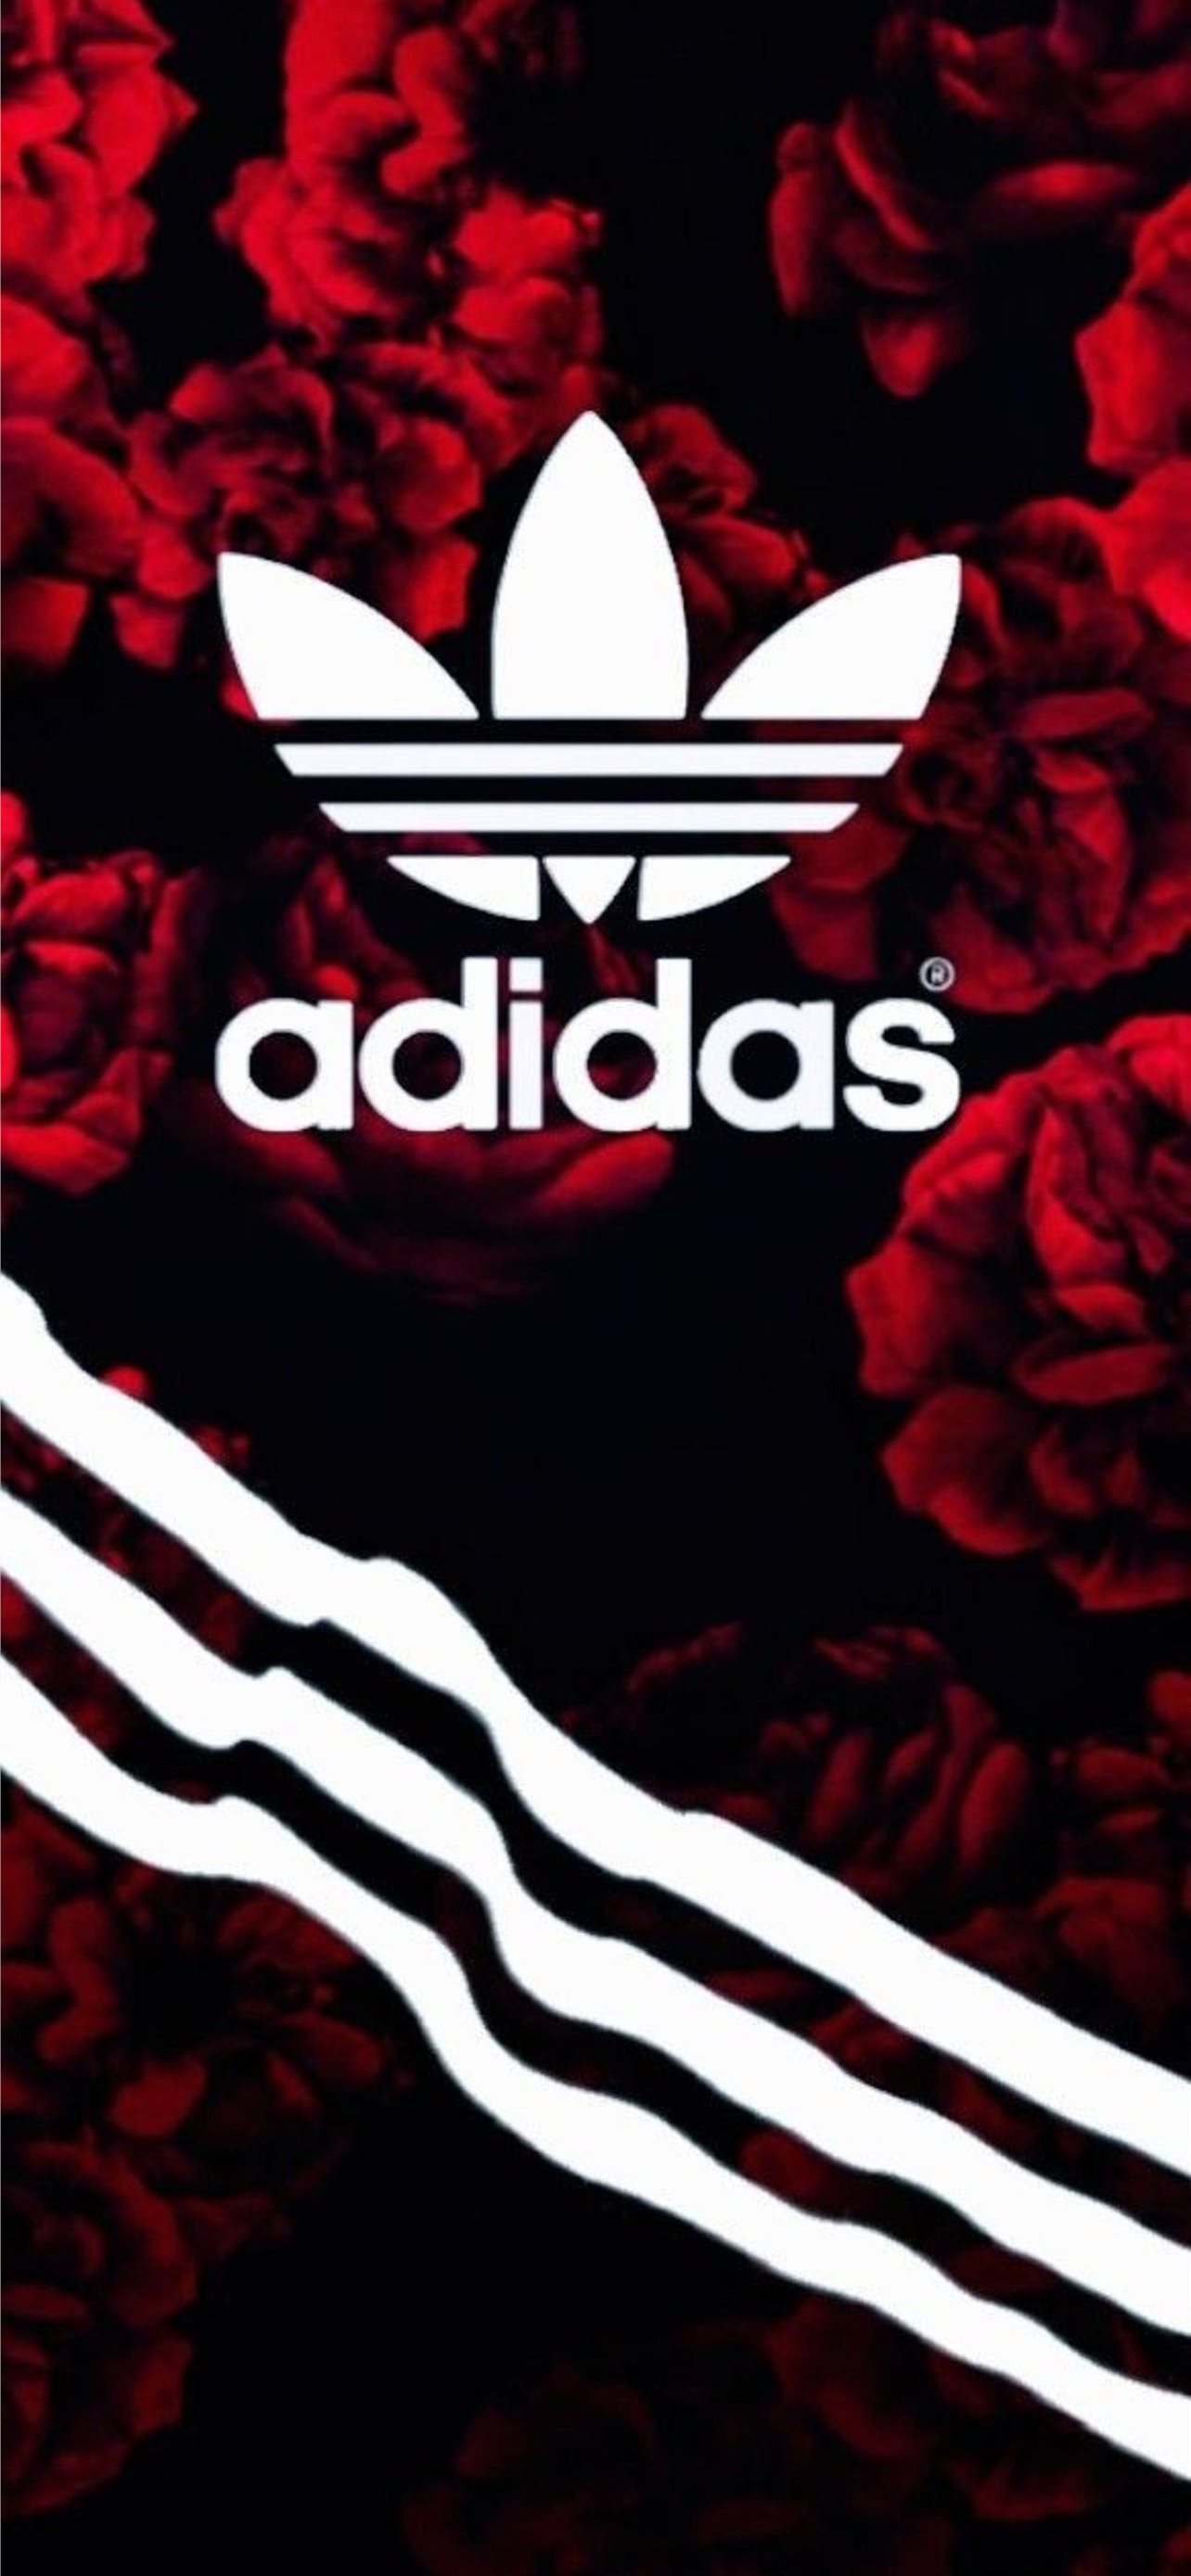 Best Adidas Iphone Hd Wallpapers Ilikewallpaper